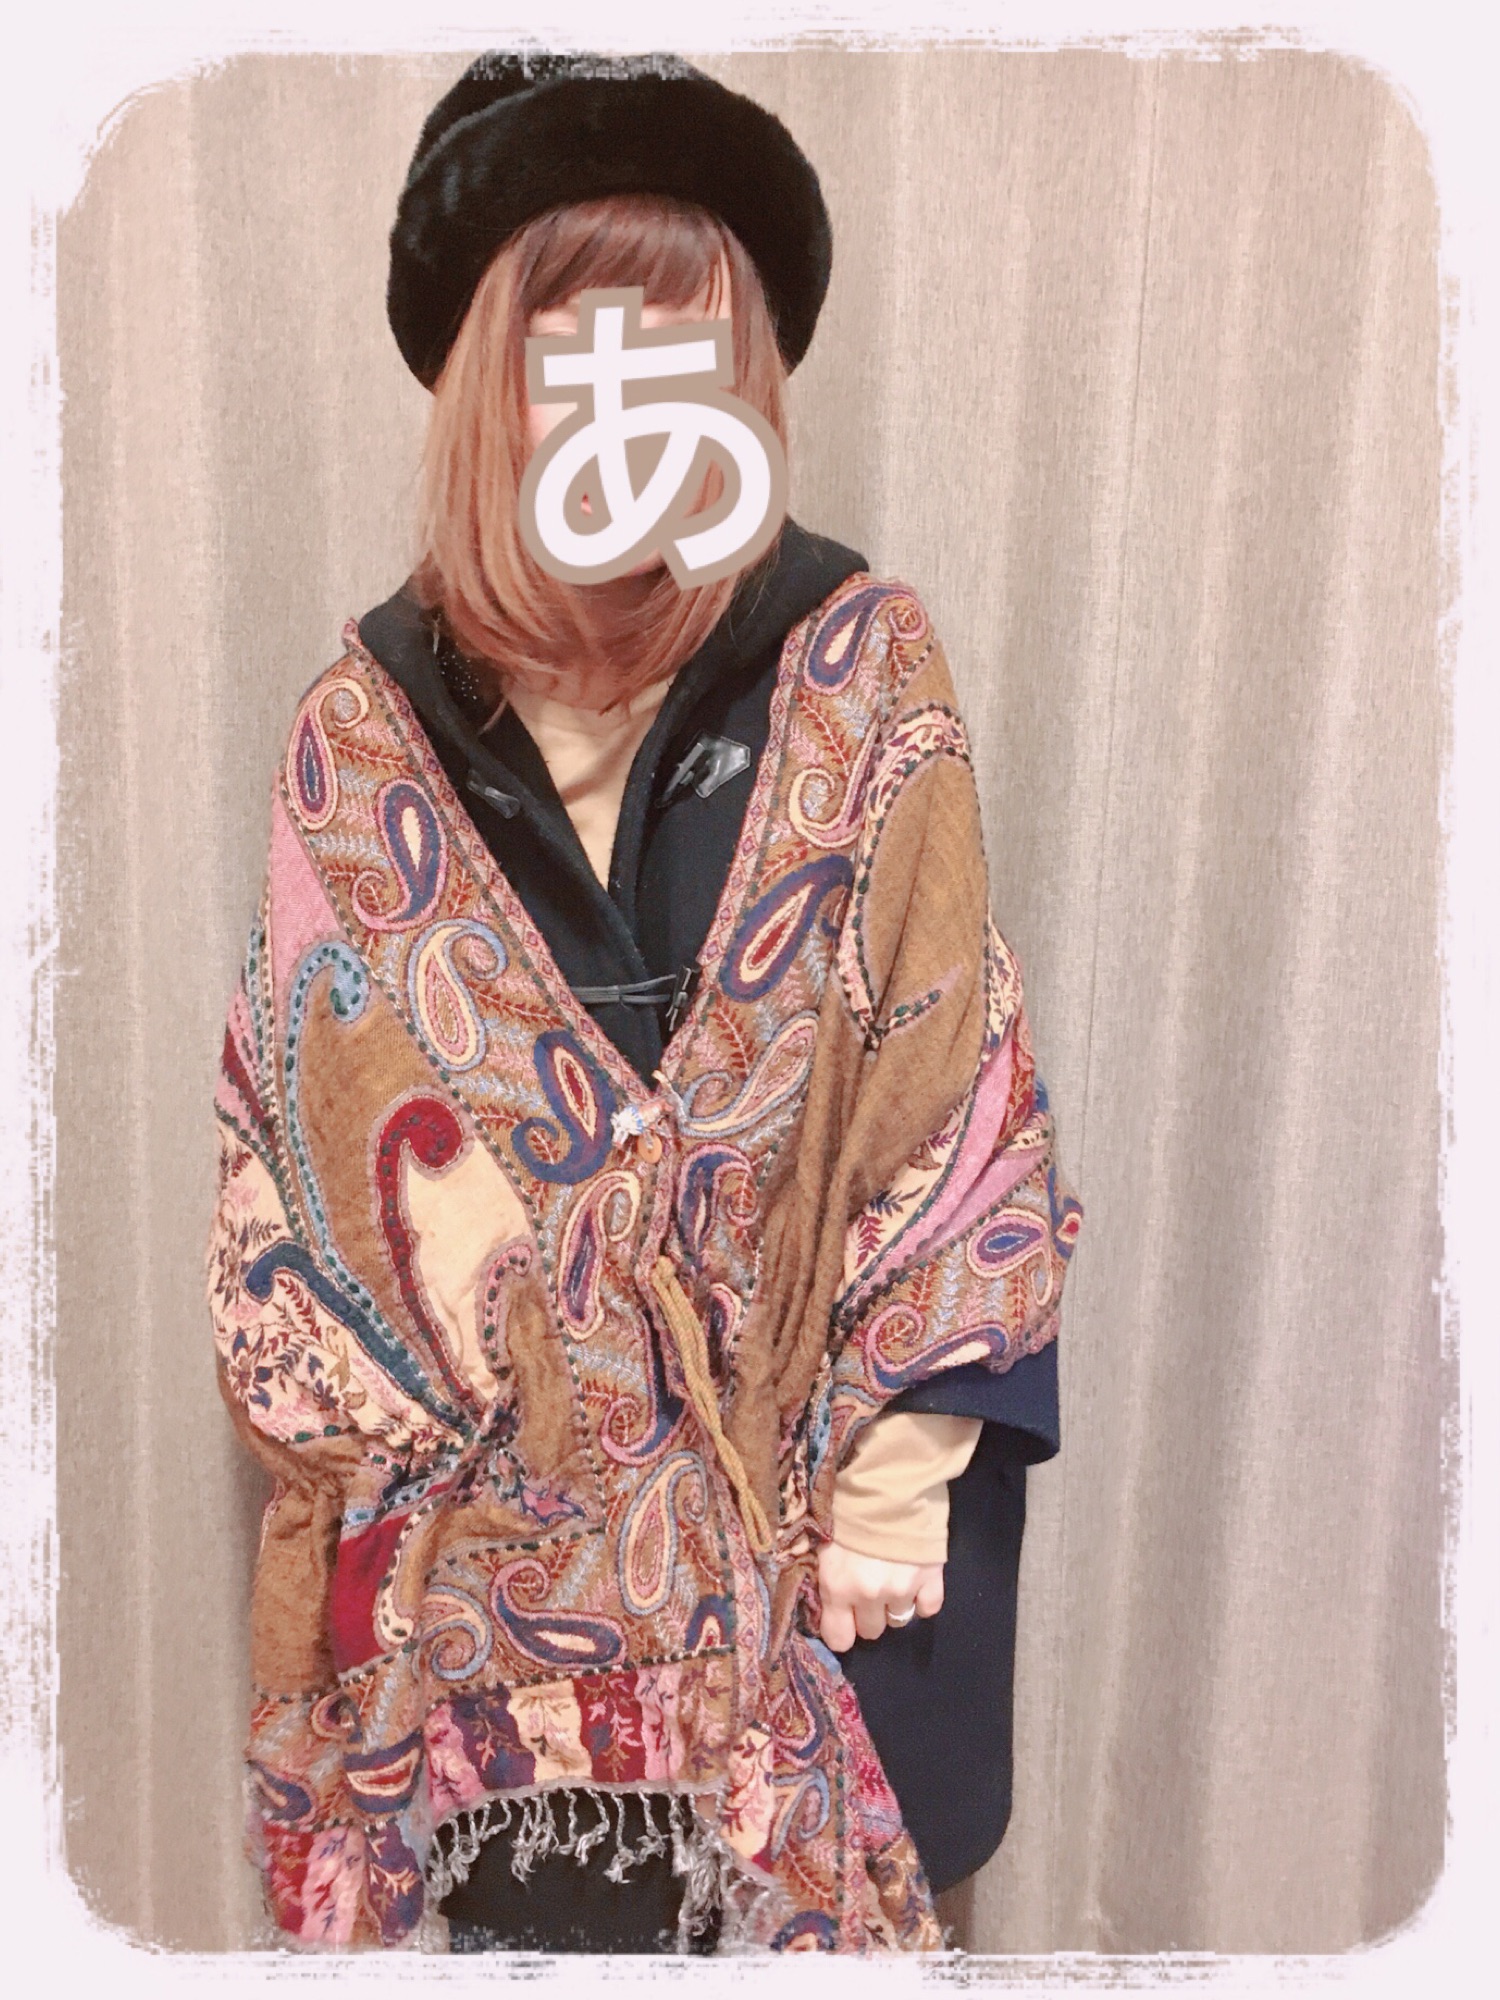 TSUMORI CHISATOのダッフルコートを使った人気ファッション